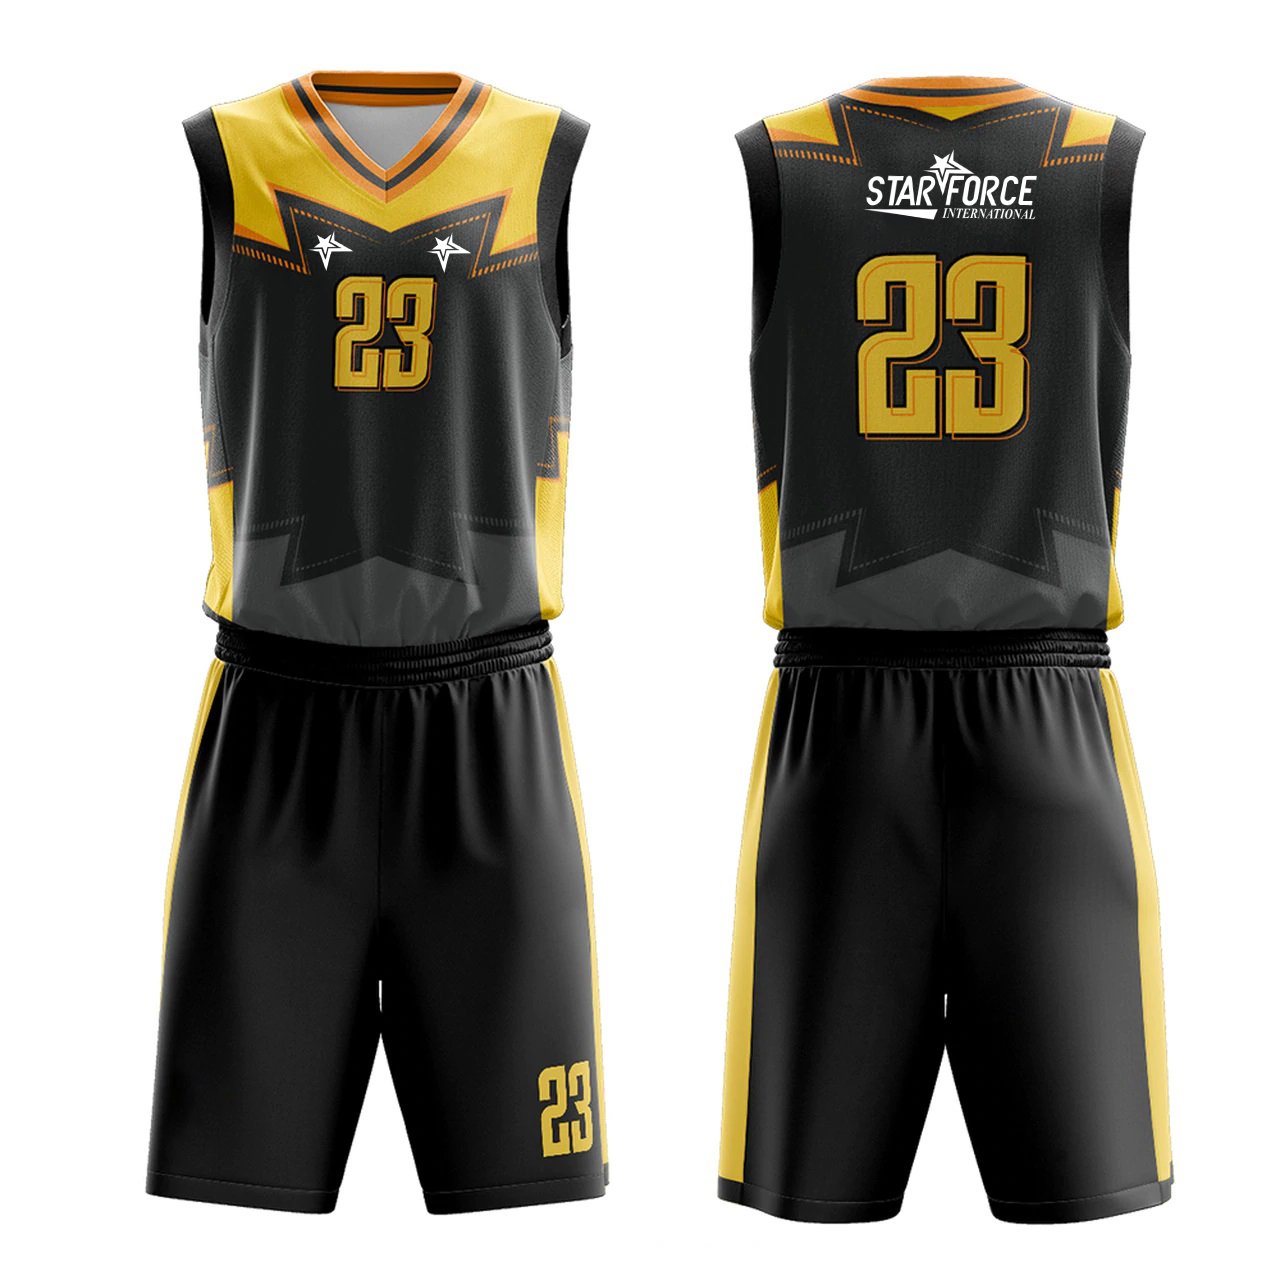 OEM Custom Design Basketball Uniforms